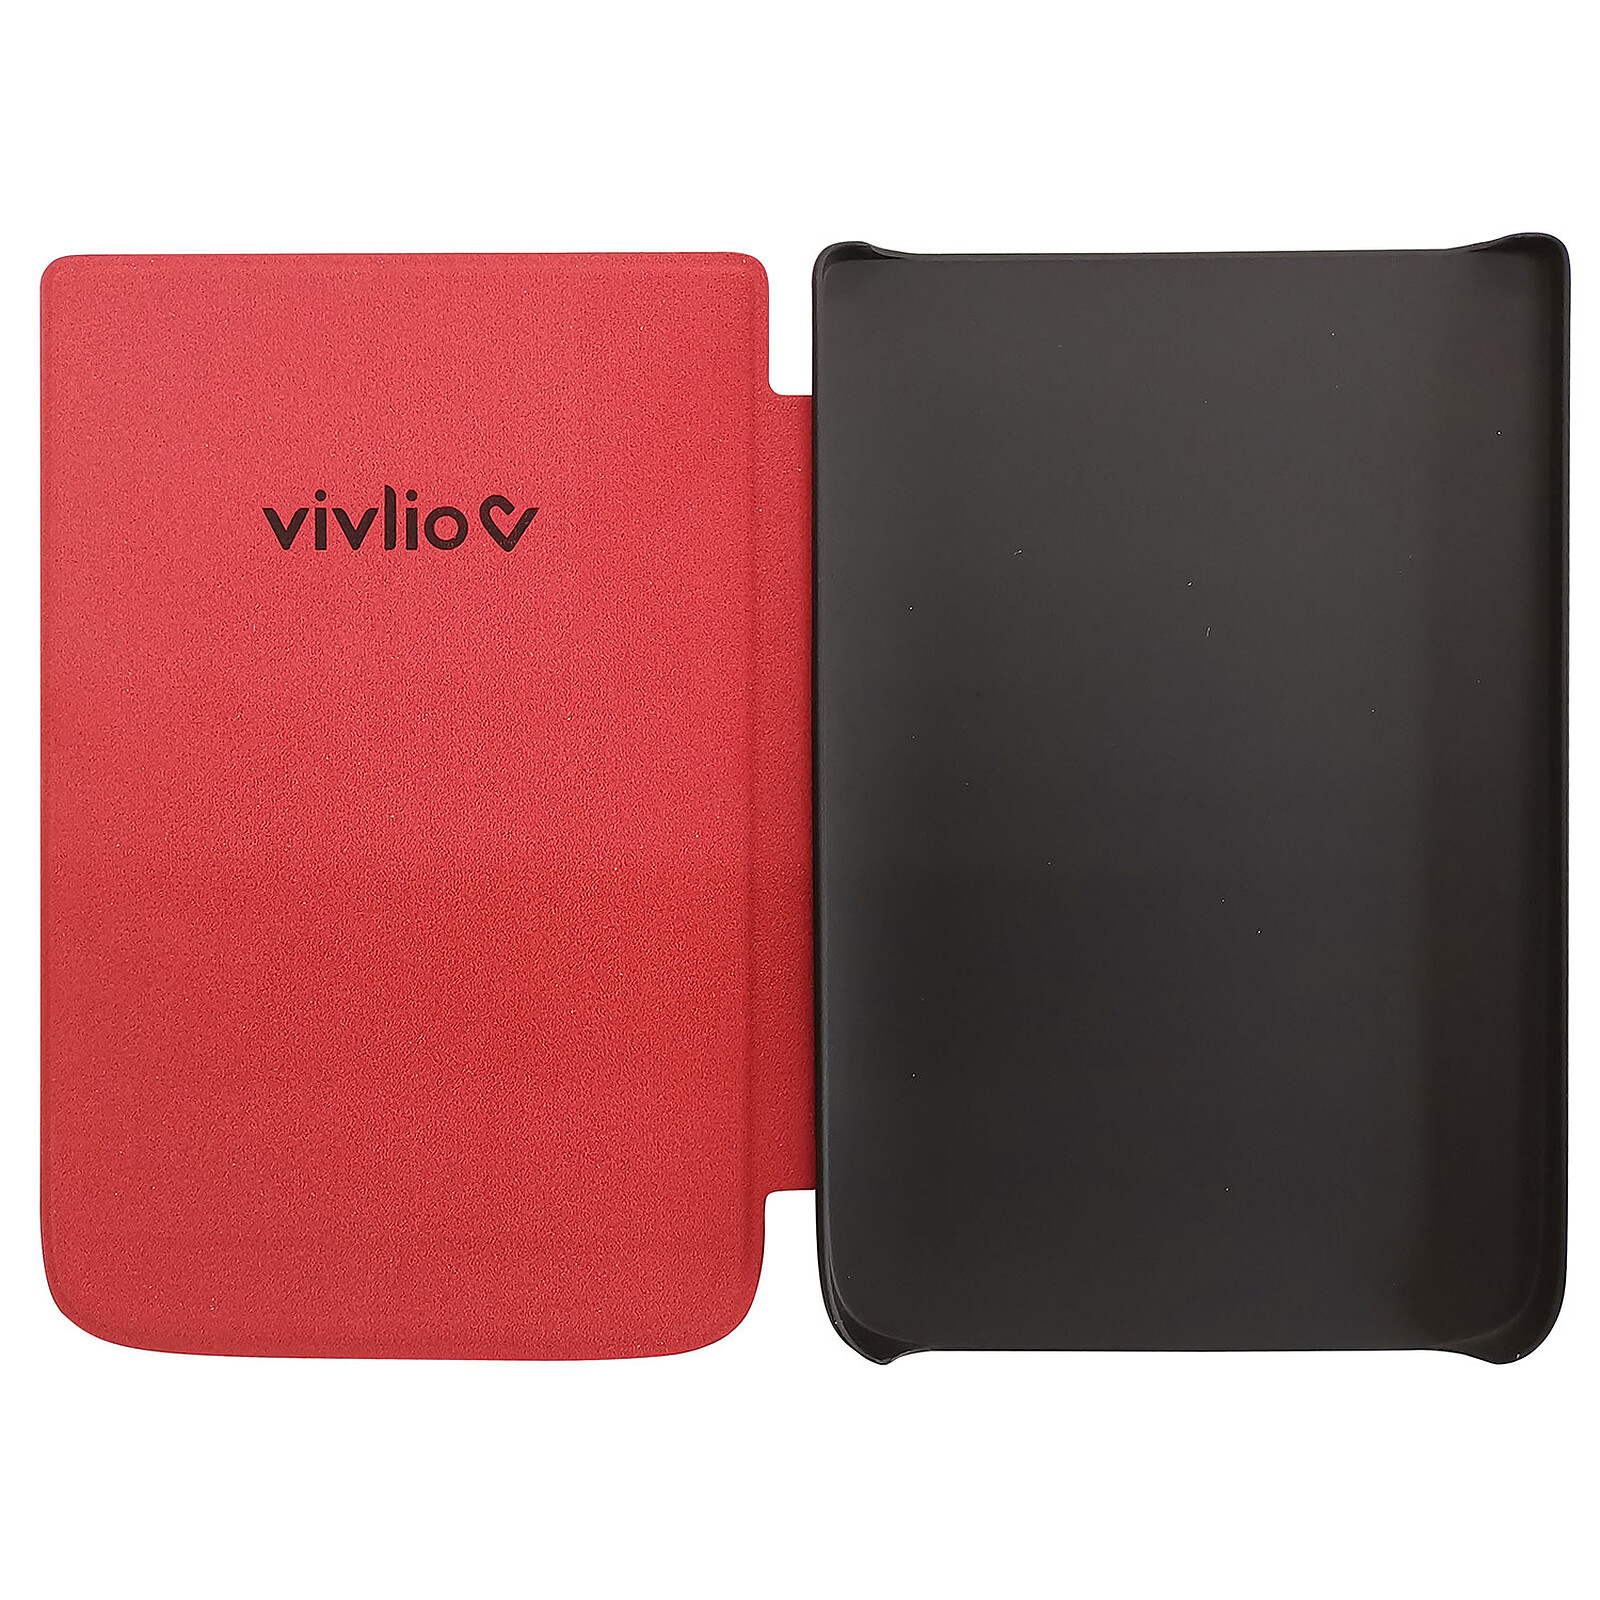 Vivlio Touch Lux 4 5/Vivlio Touch HD Plus/Vivlio Color 2020